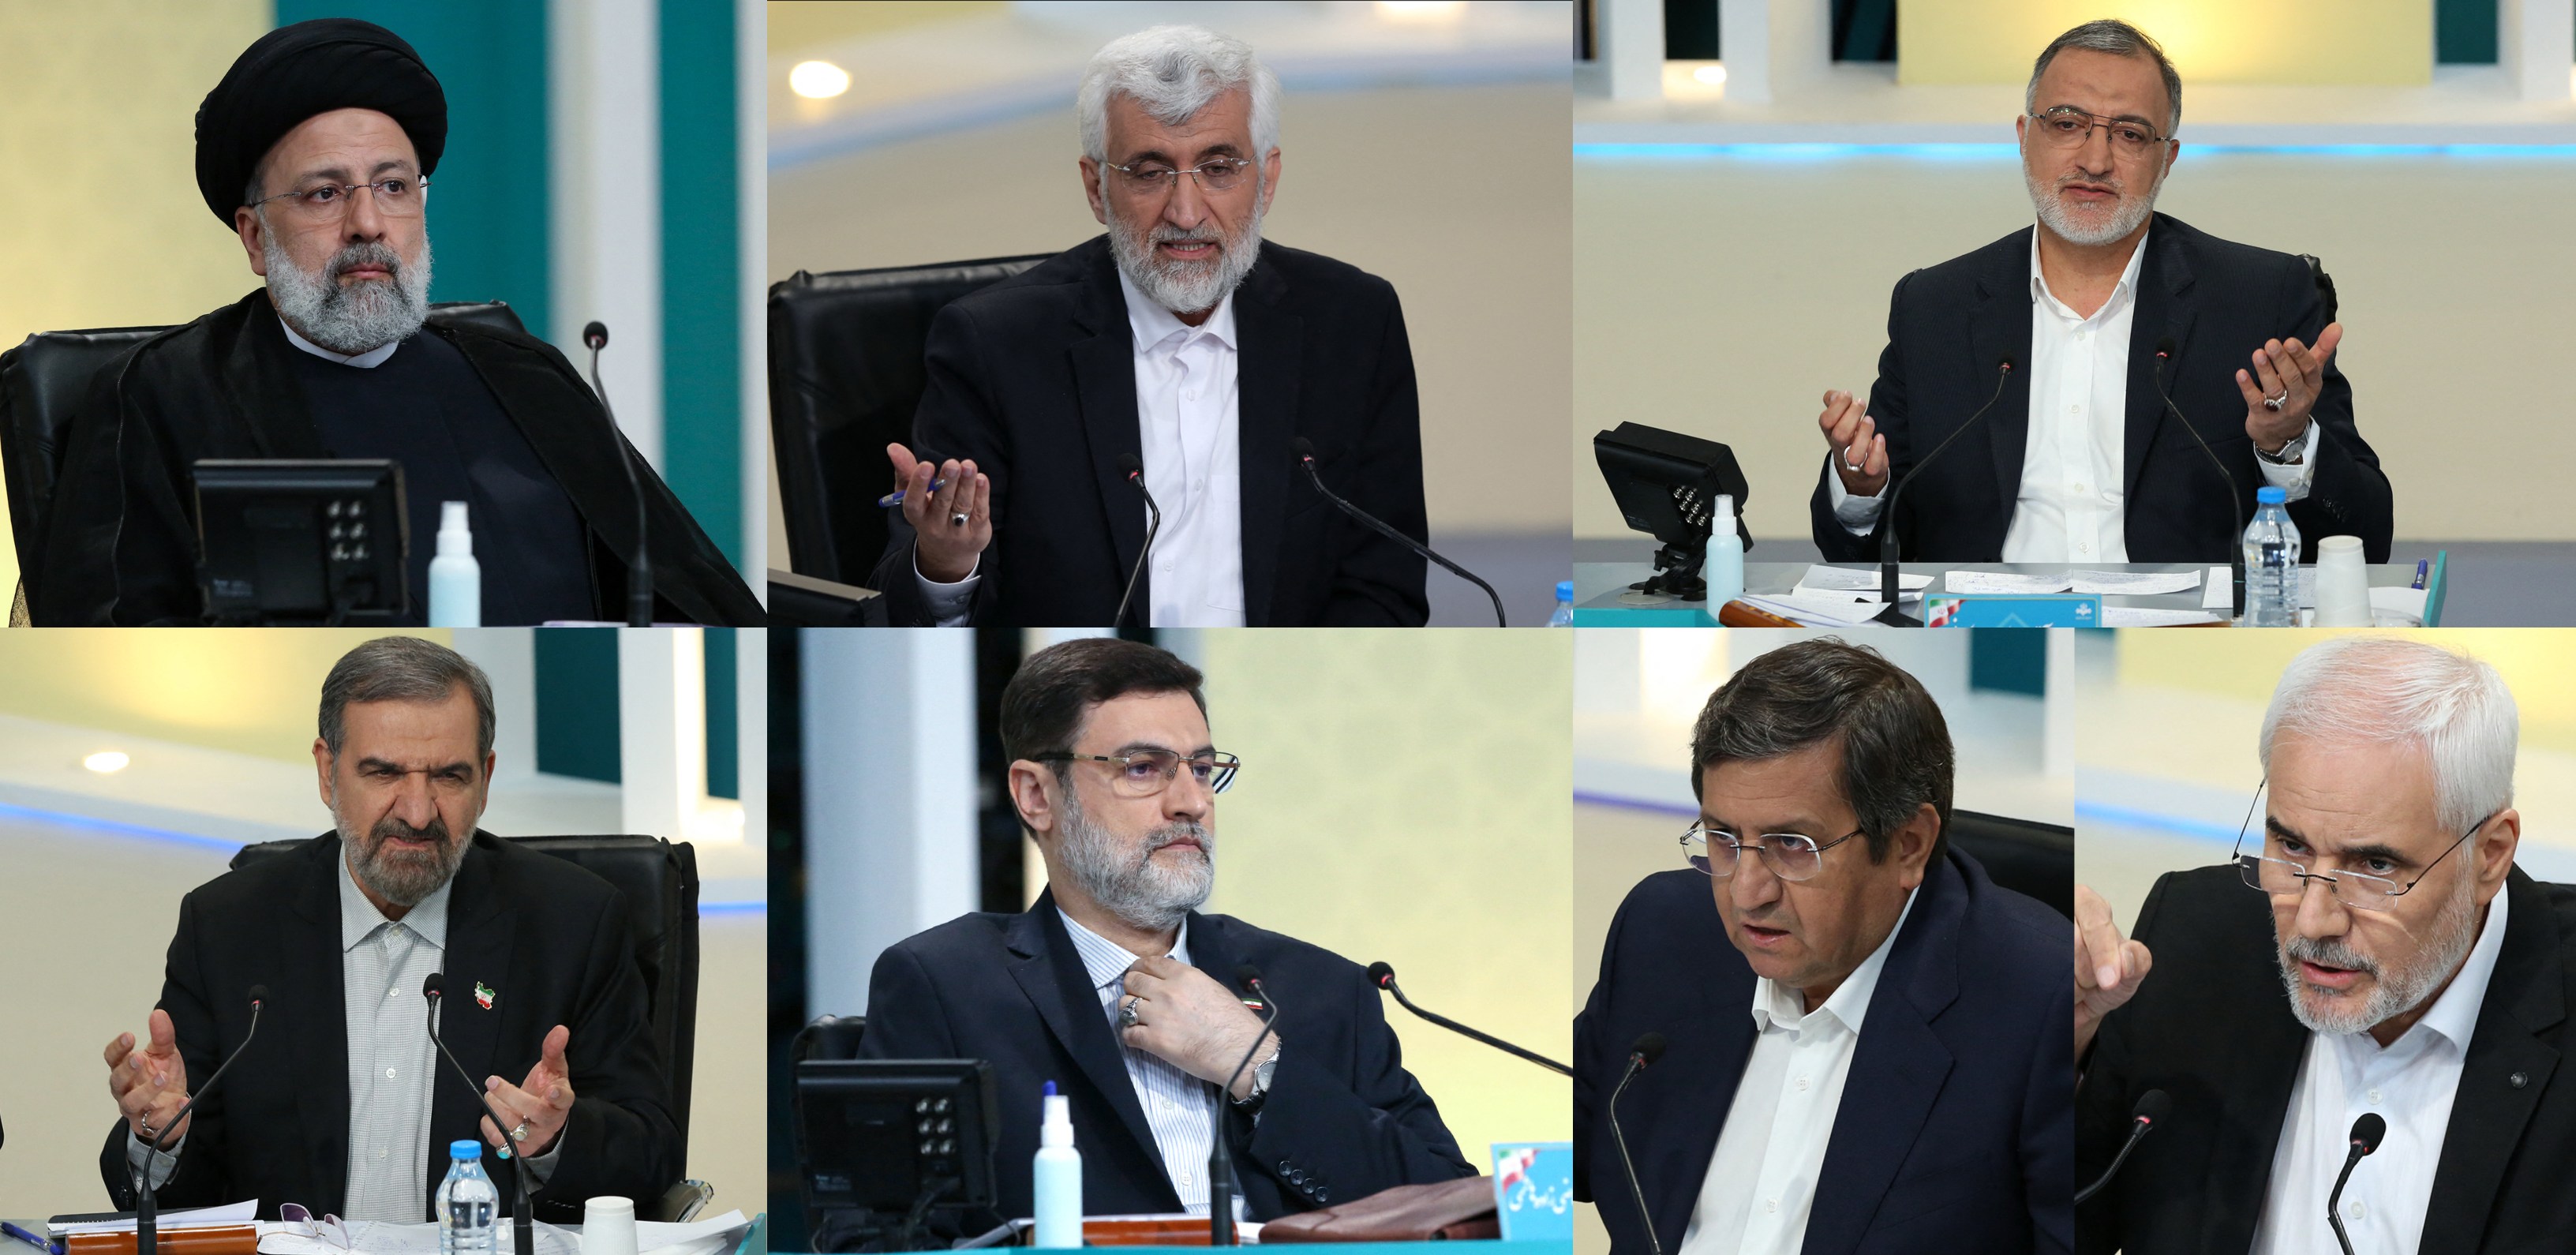 The candidates during a debate on 8 June. From top left: Ebrahim Raisi, Saeed Jalili, Alireza Zakani, Mohsen Rezaei, Amir Hossein Ghazizadeh, Abdolnaser Hemmati and Mohsen Mehralizadeh (AFP/Handout)